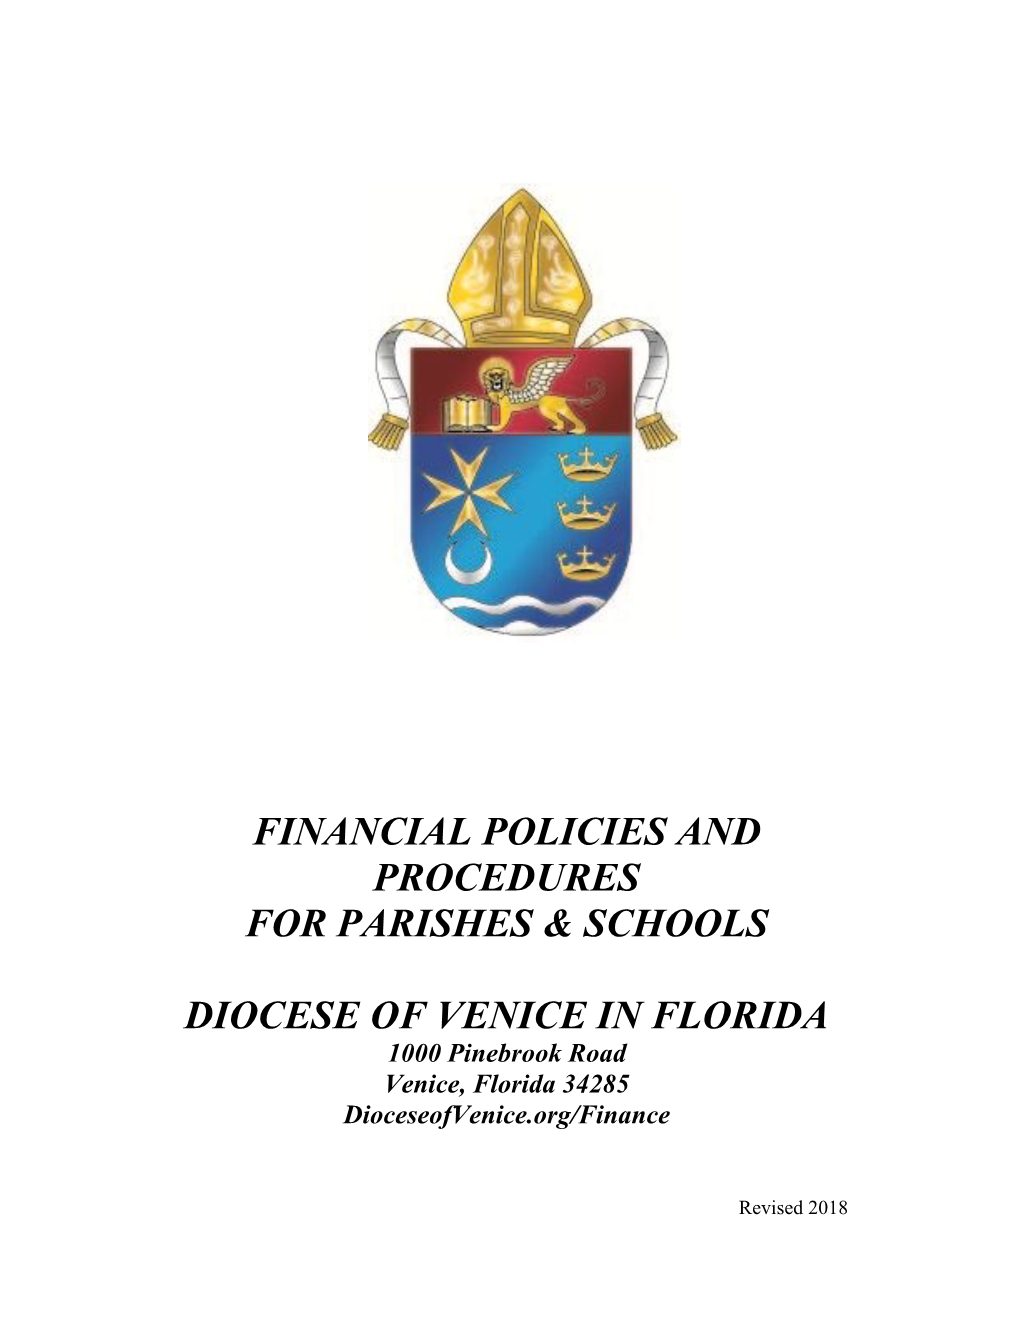 Parish and School Financial Policies & Procedures